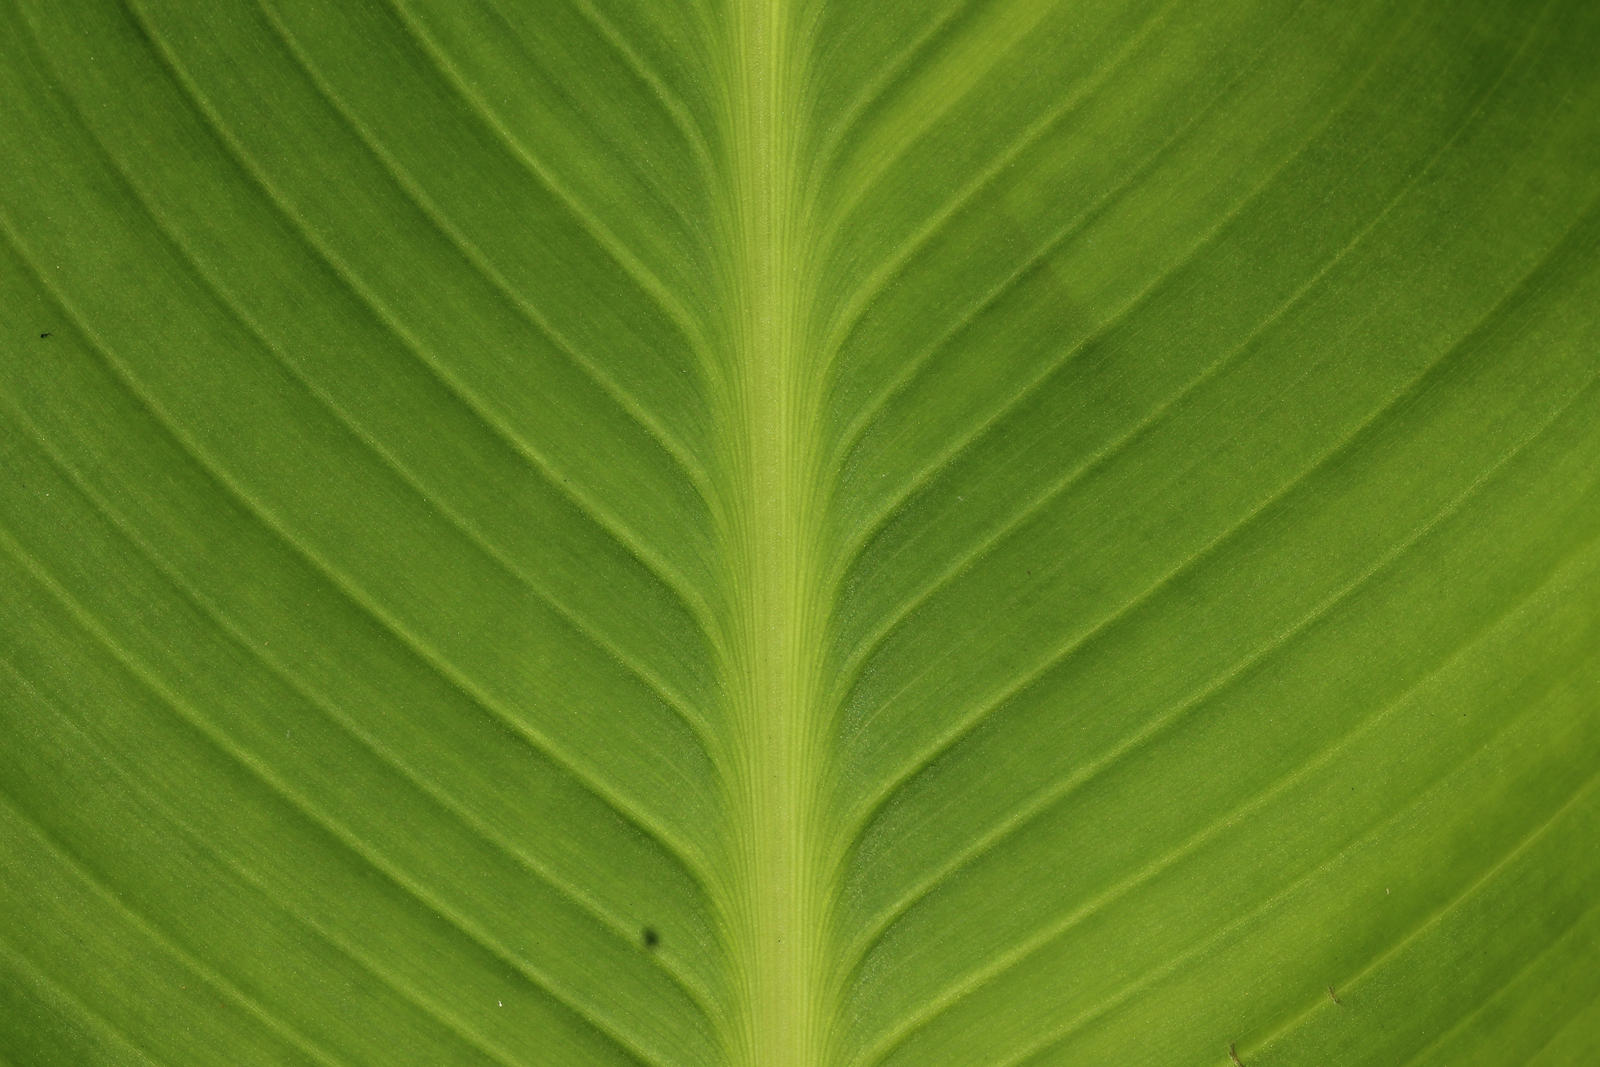 Leaf Texture 5 Stock